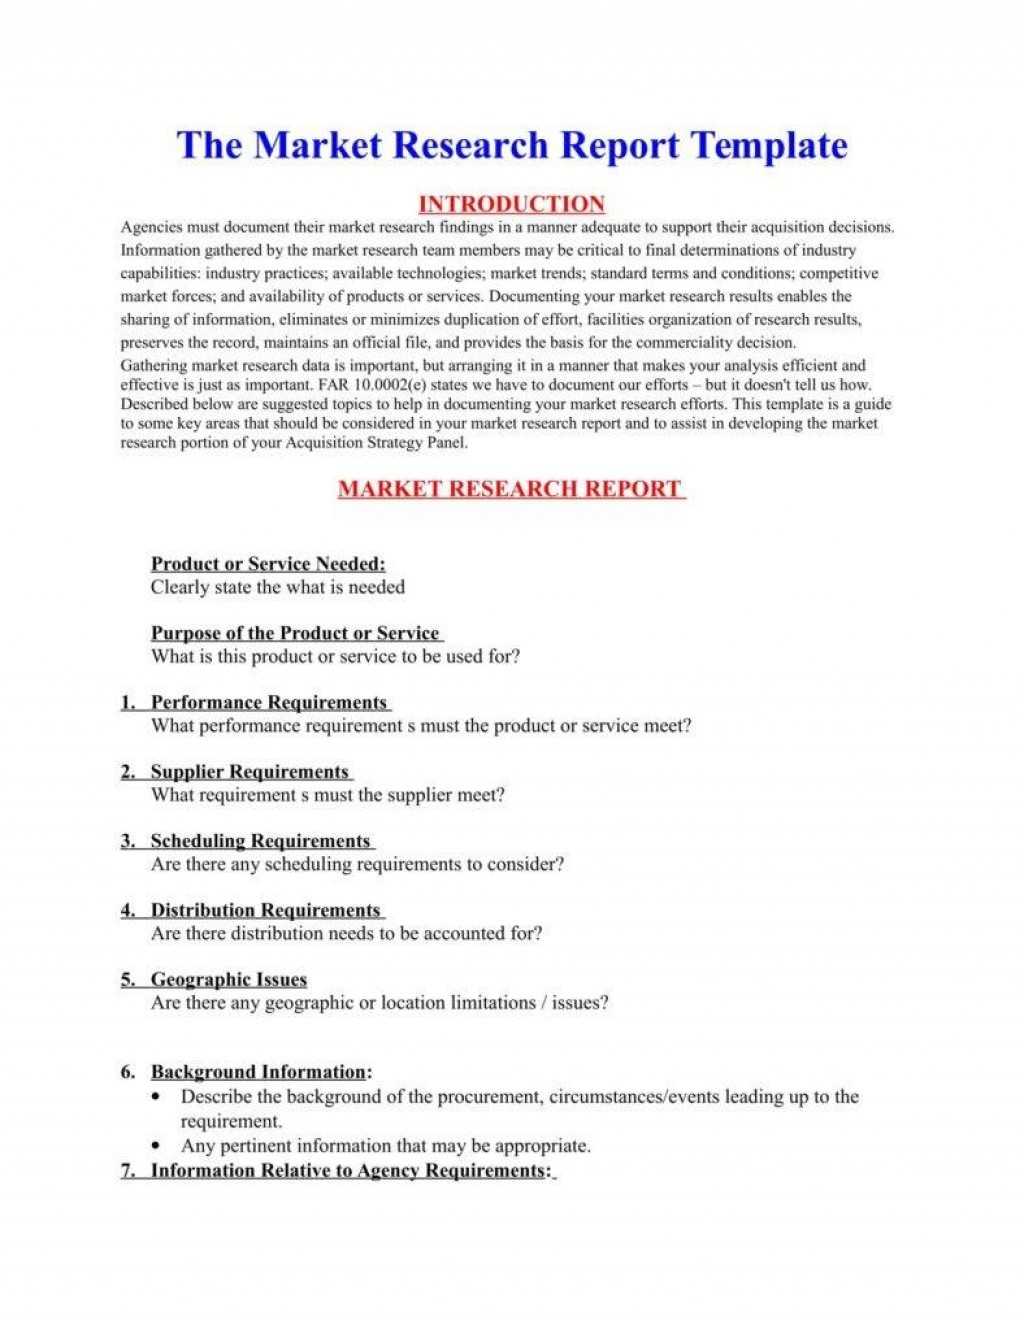 008 Market Research Report Template Unusual Ideas Analysis For Market Research Report Template